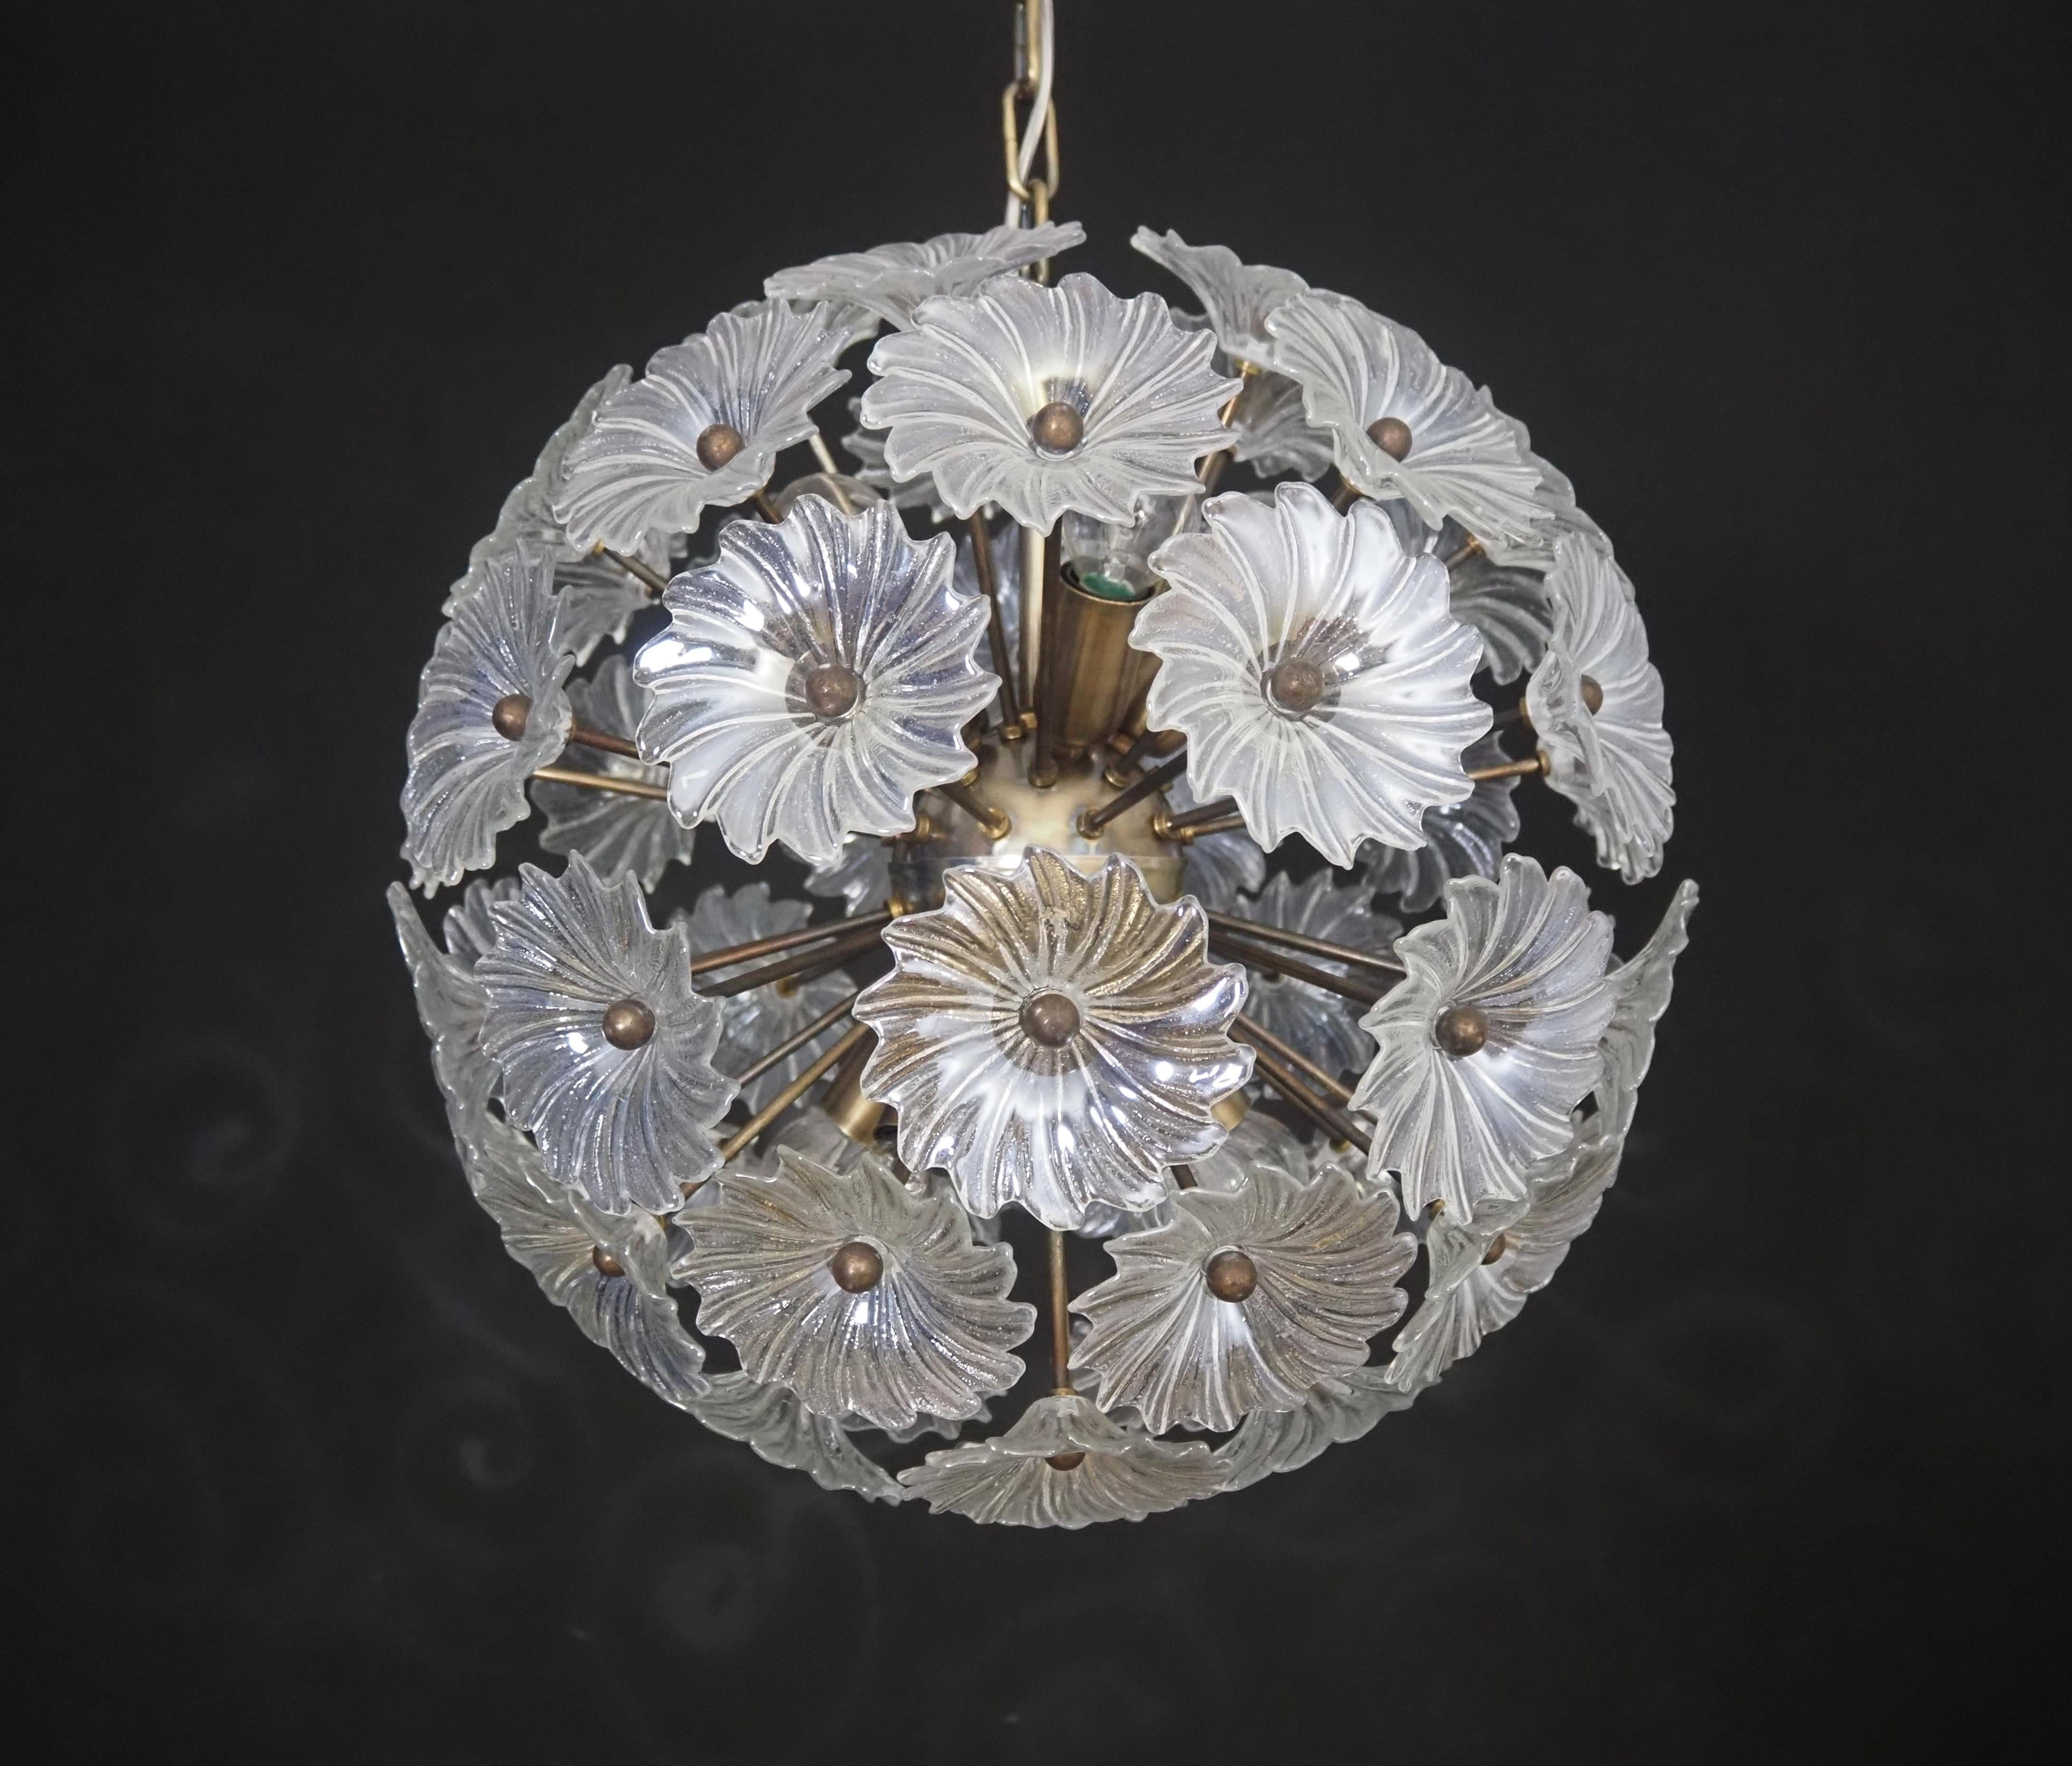 20th Century Vintage Sputnik Italian crystal chandelier - 51 Daisy clear glasses For Sale